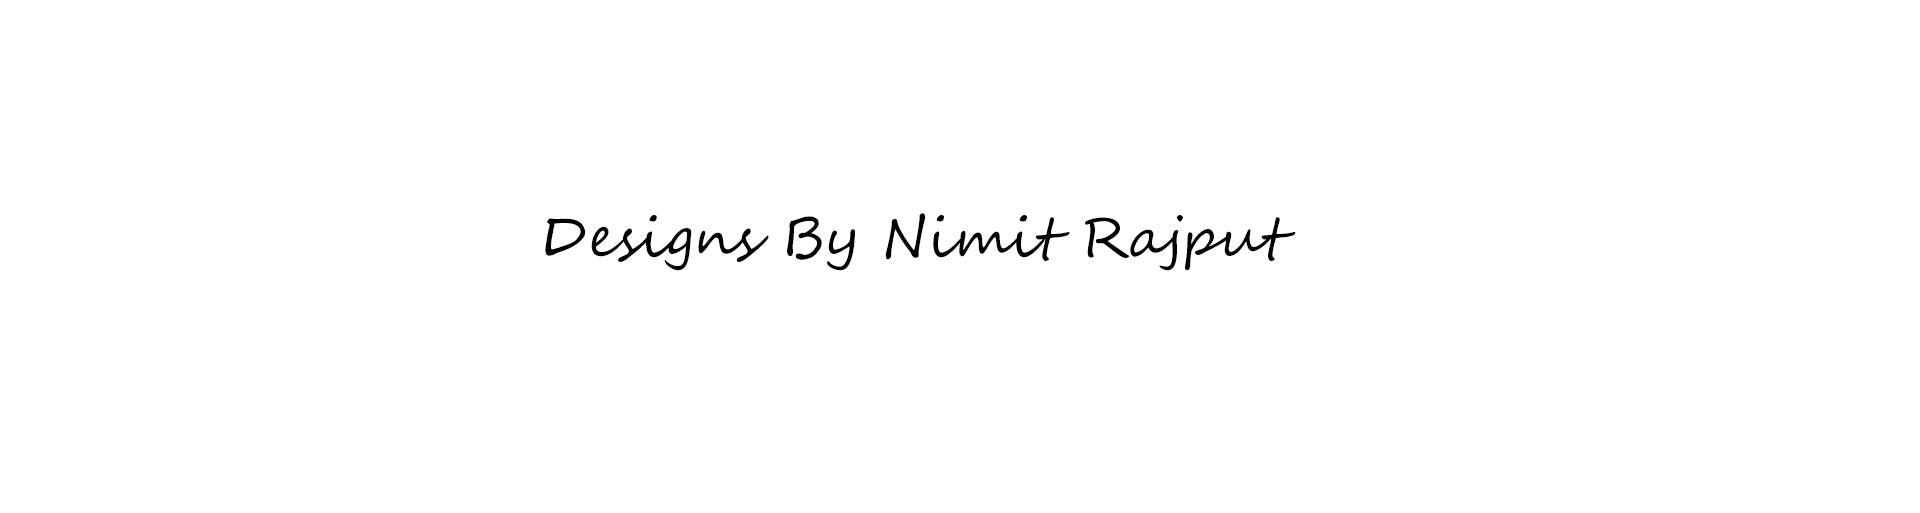 Nimit Rajput